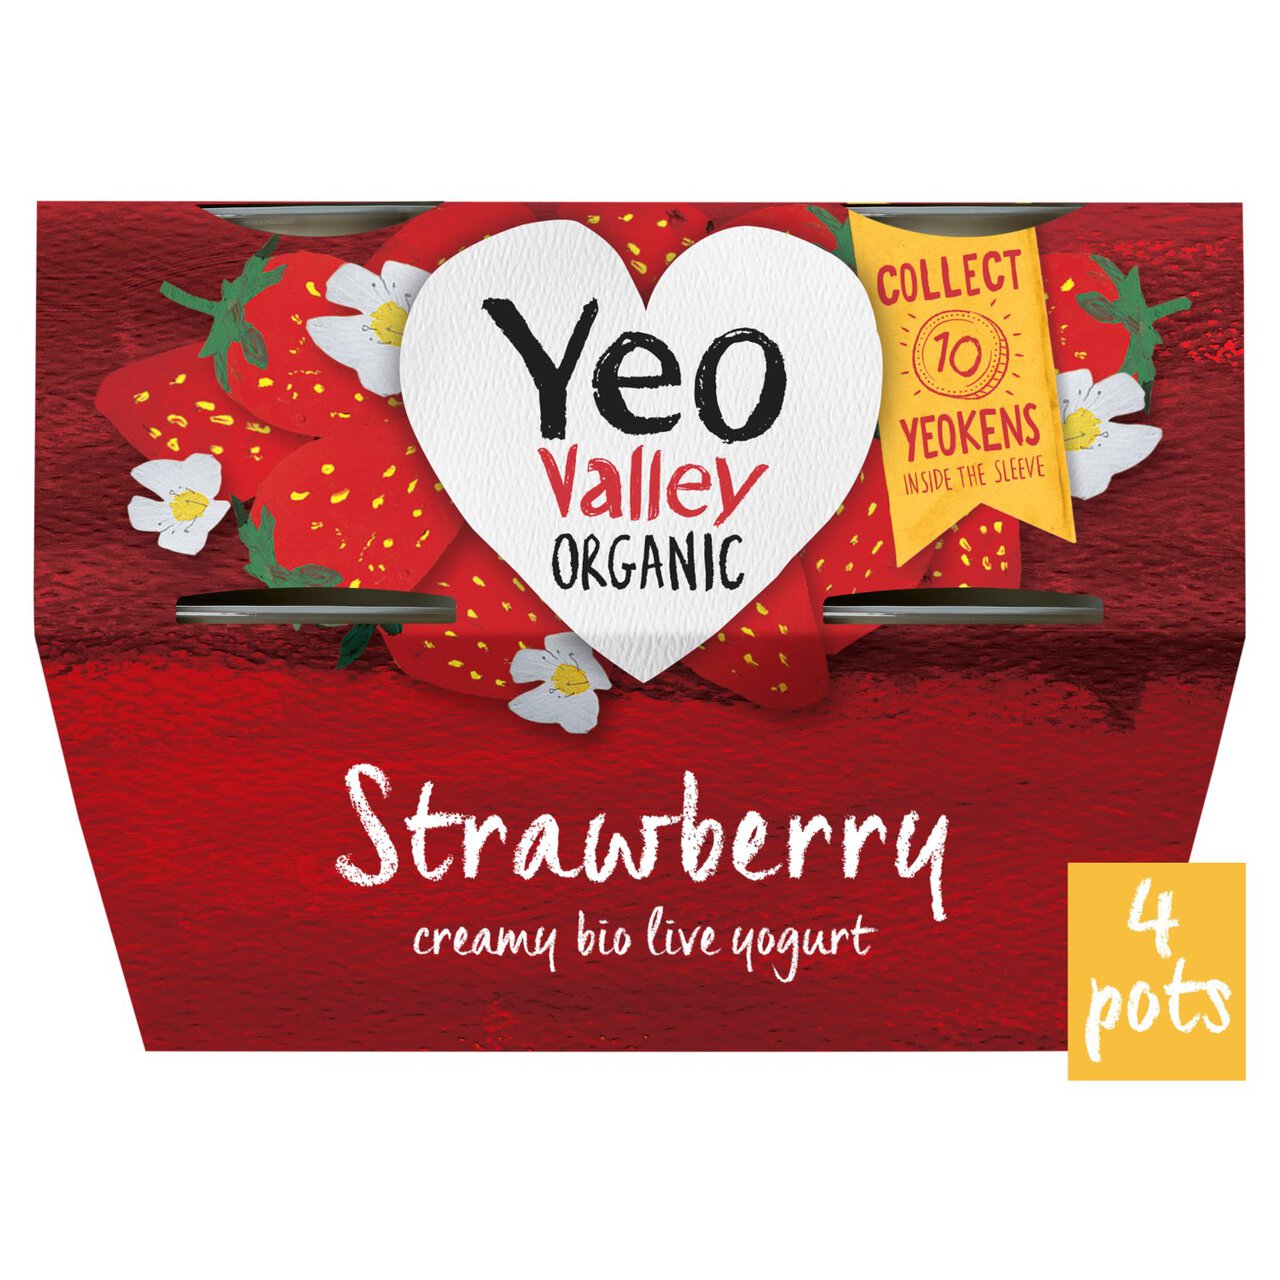 Yeo Valley Organic Strawberry Yoghurt Pots 4 x 110g